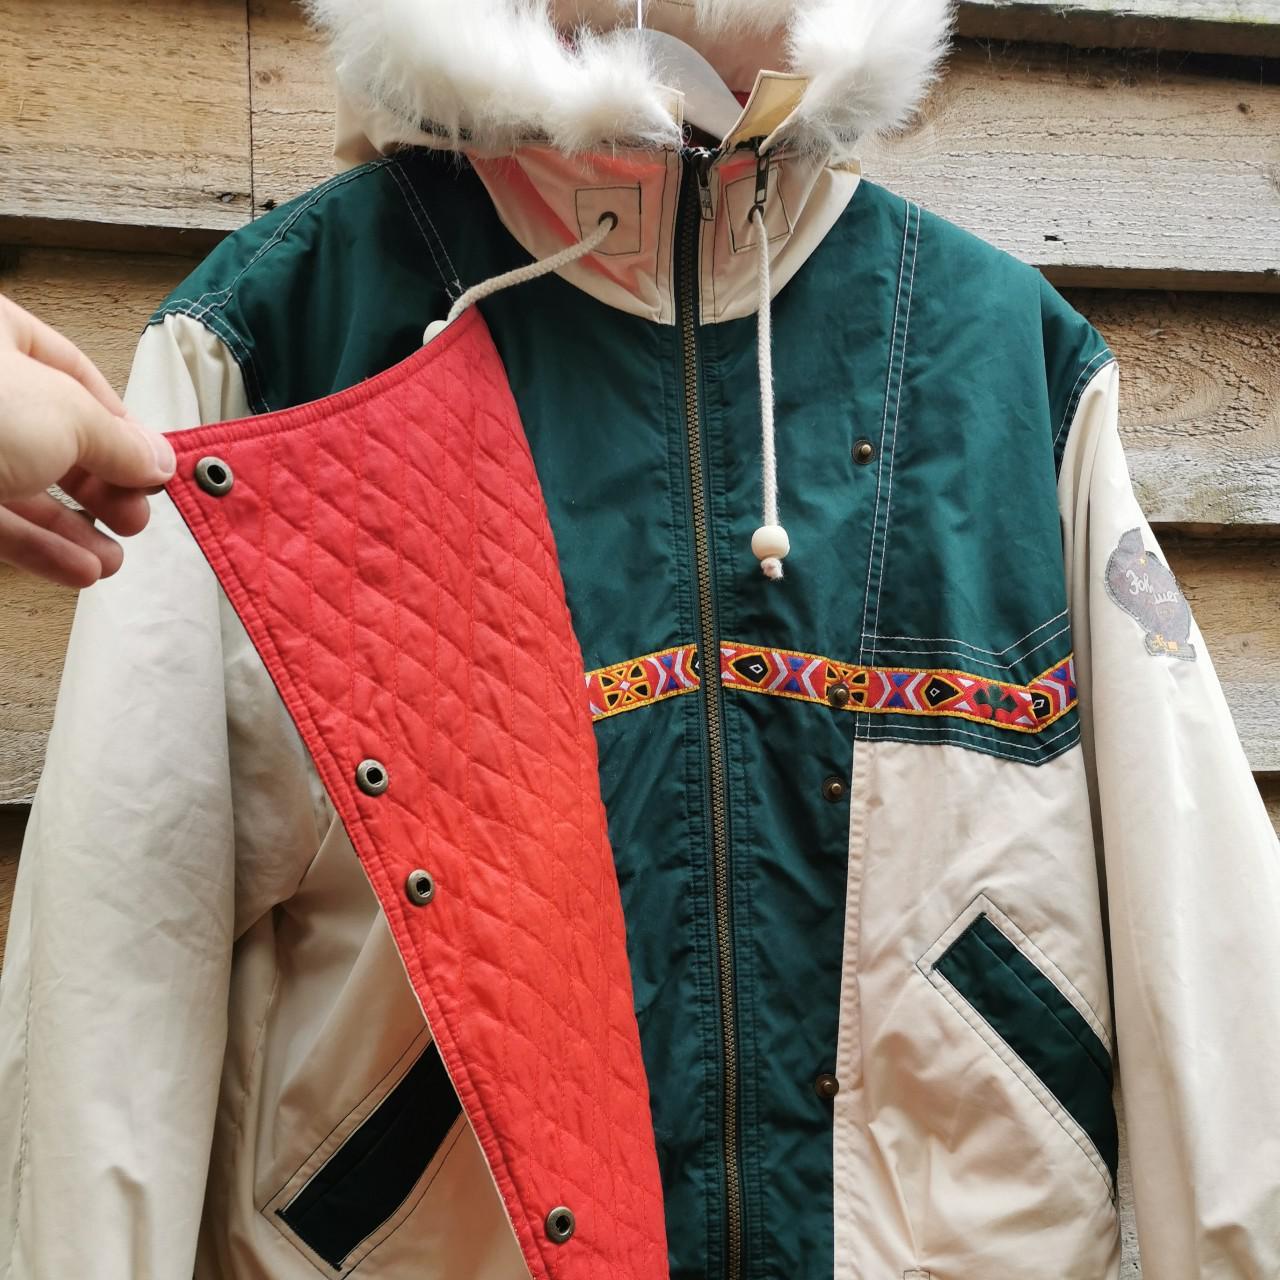 Product Image 4 - Vintage Unbranded Jacket
Good condition
Size Large

Description: